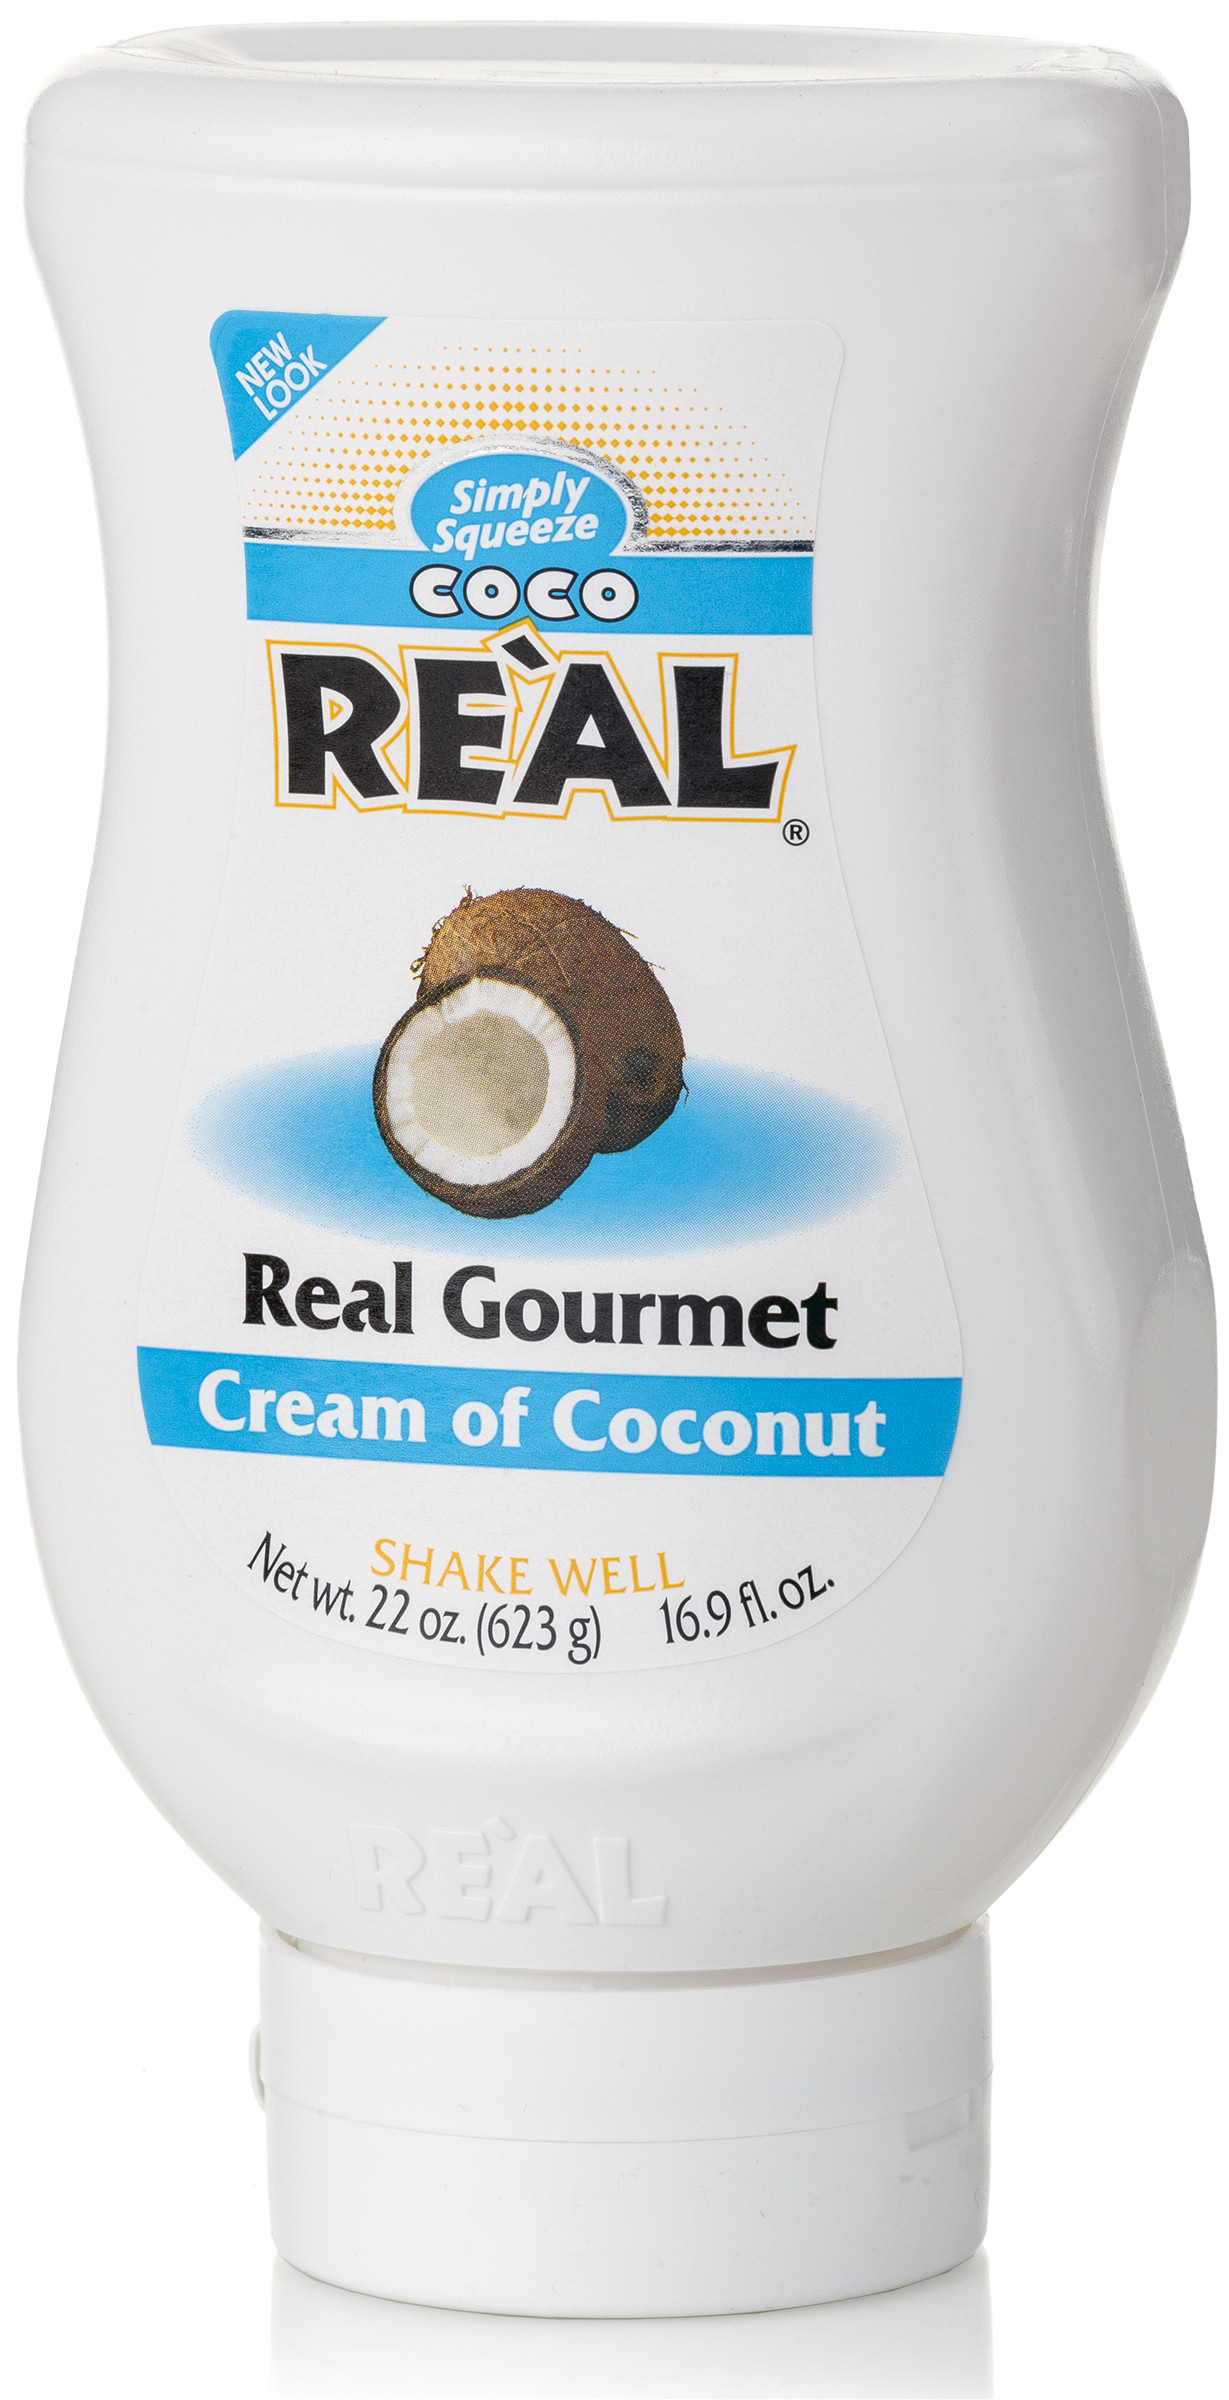 Coco Real, Cream of Coconut, 16.9 fl. oz - image 1 of 8